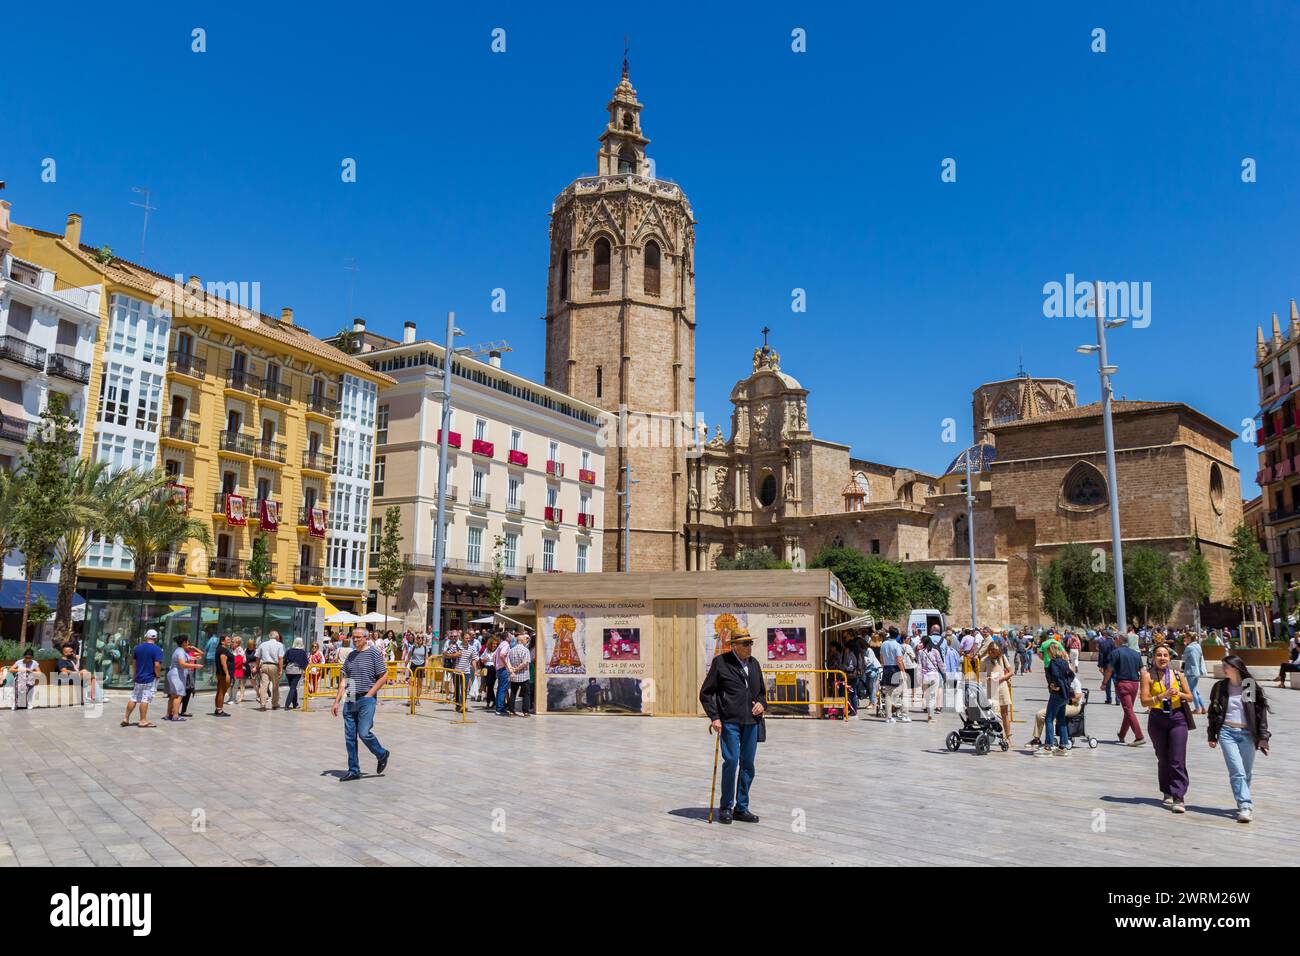 Plaza de la Reina with the historic cathedral in Valencia, Spain Stock Photo